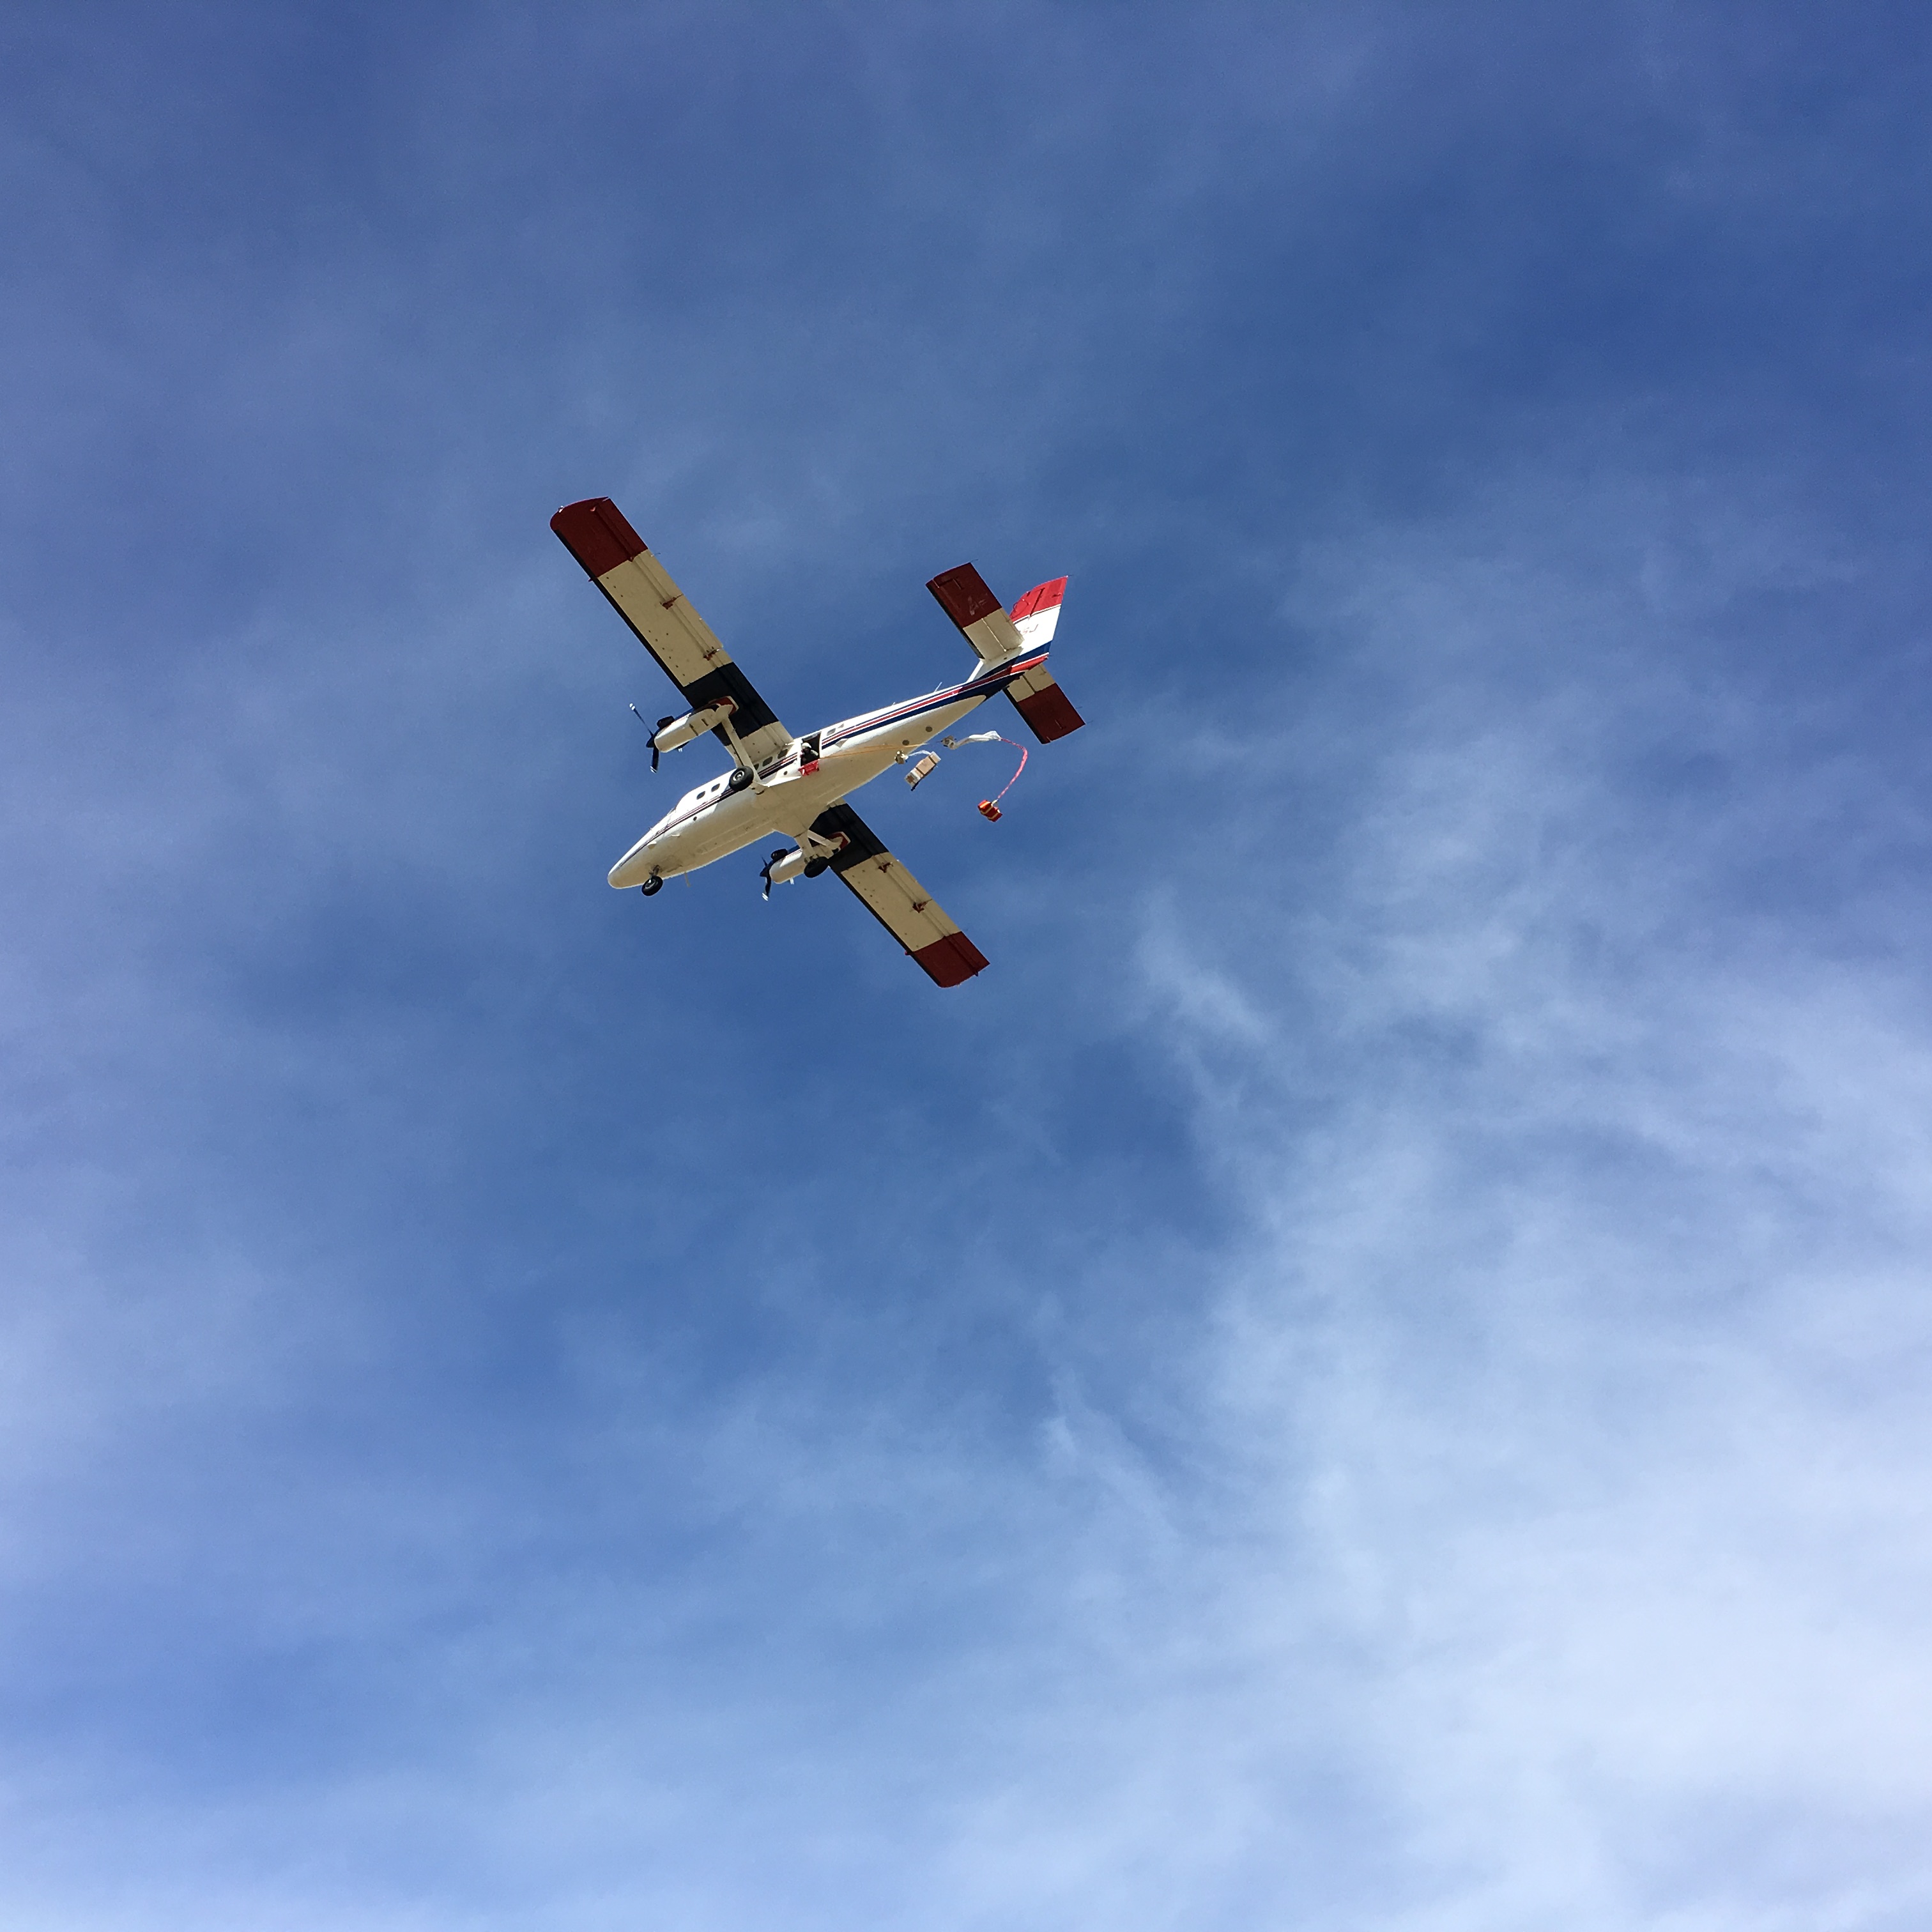 Smokejumper aircraft overhead